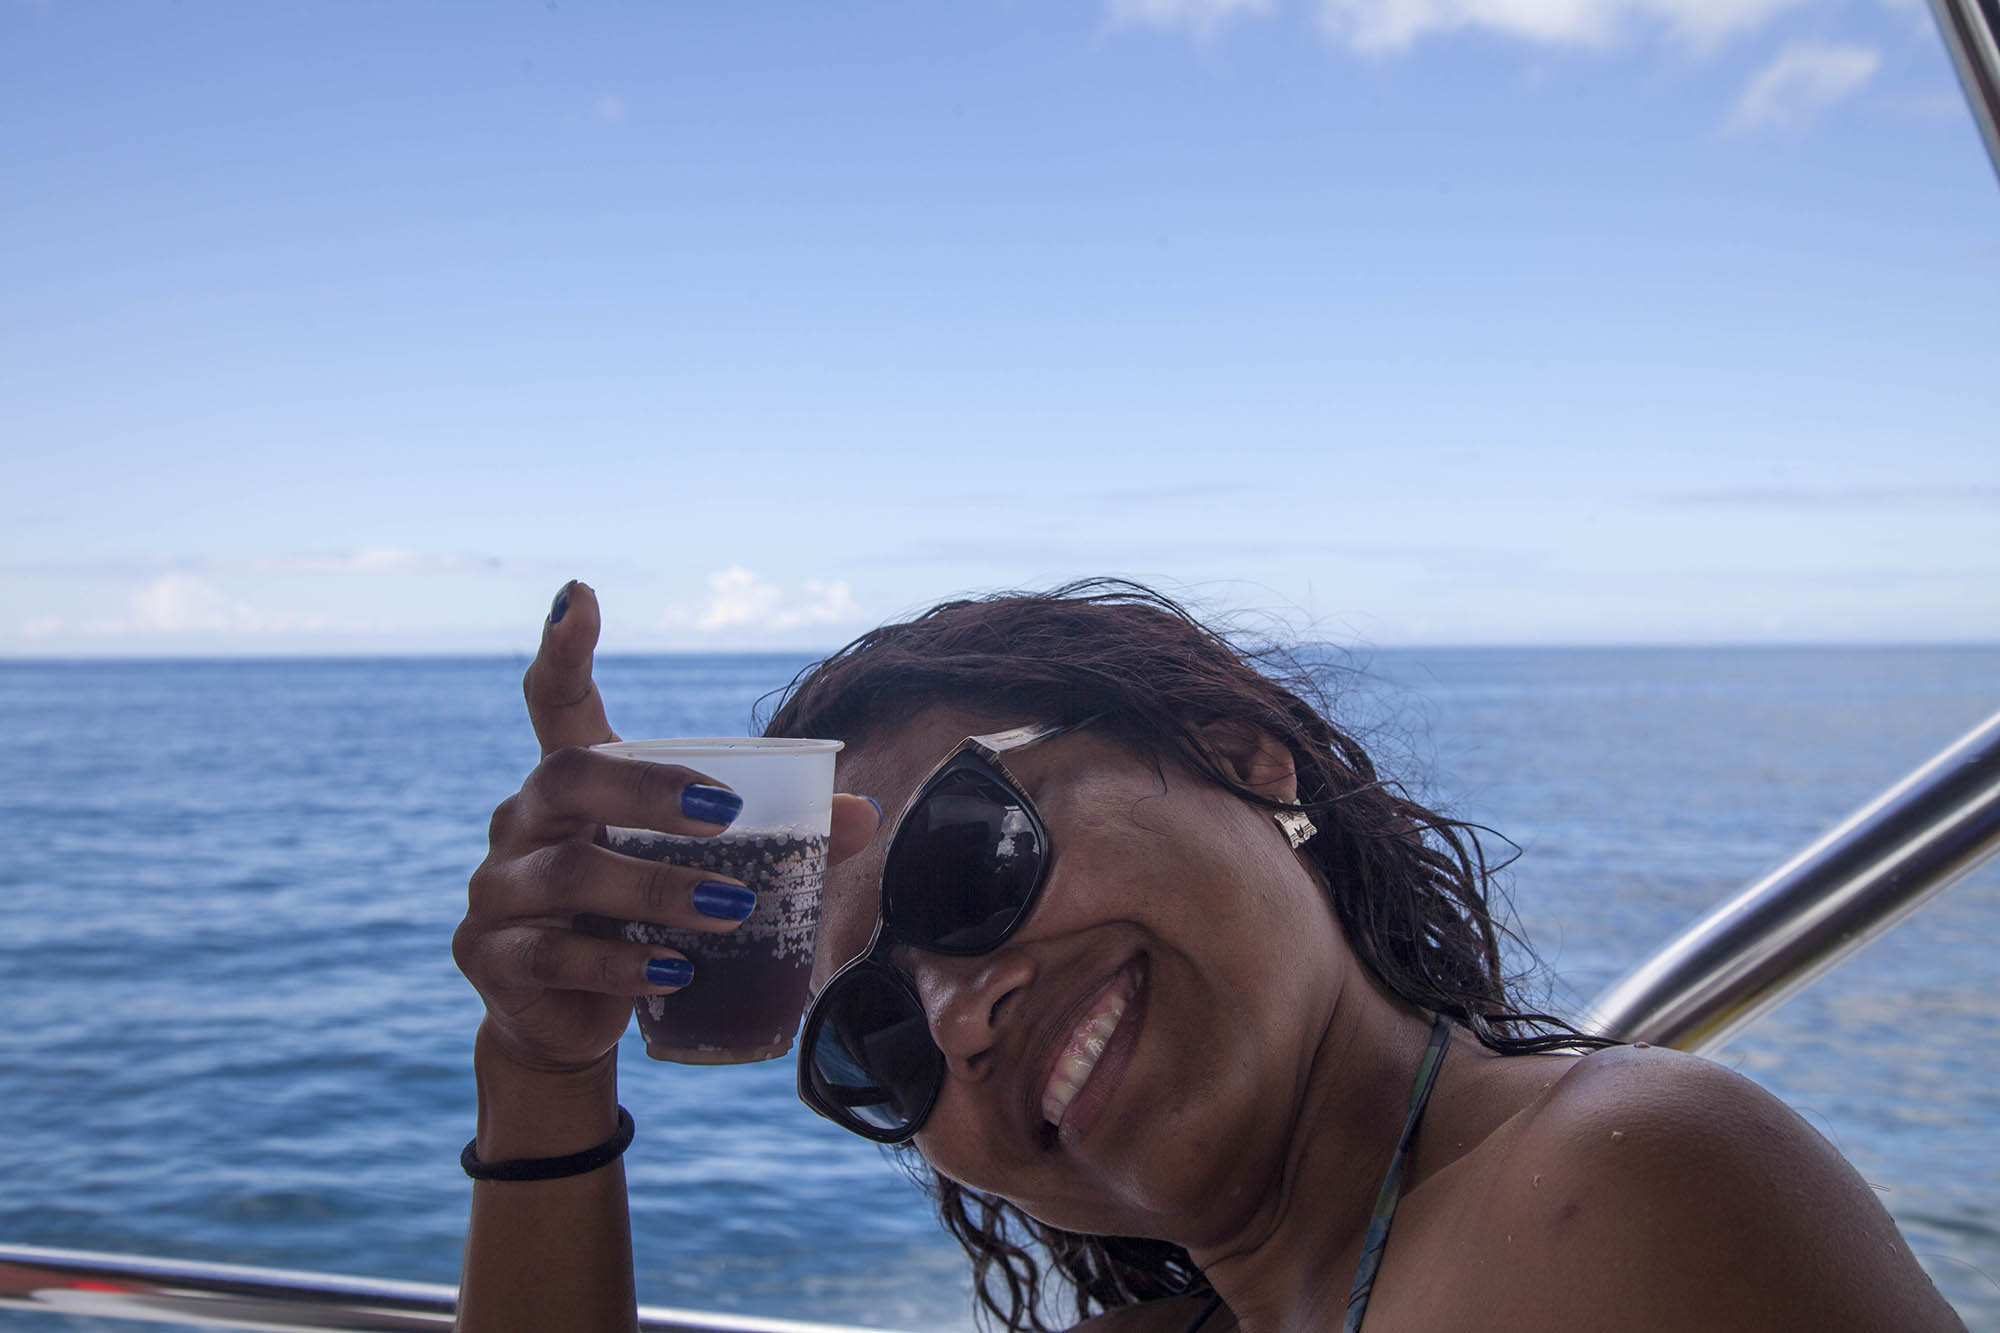 Sofia on catamaran to Isla Saona, visiting the Dominican Republic